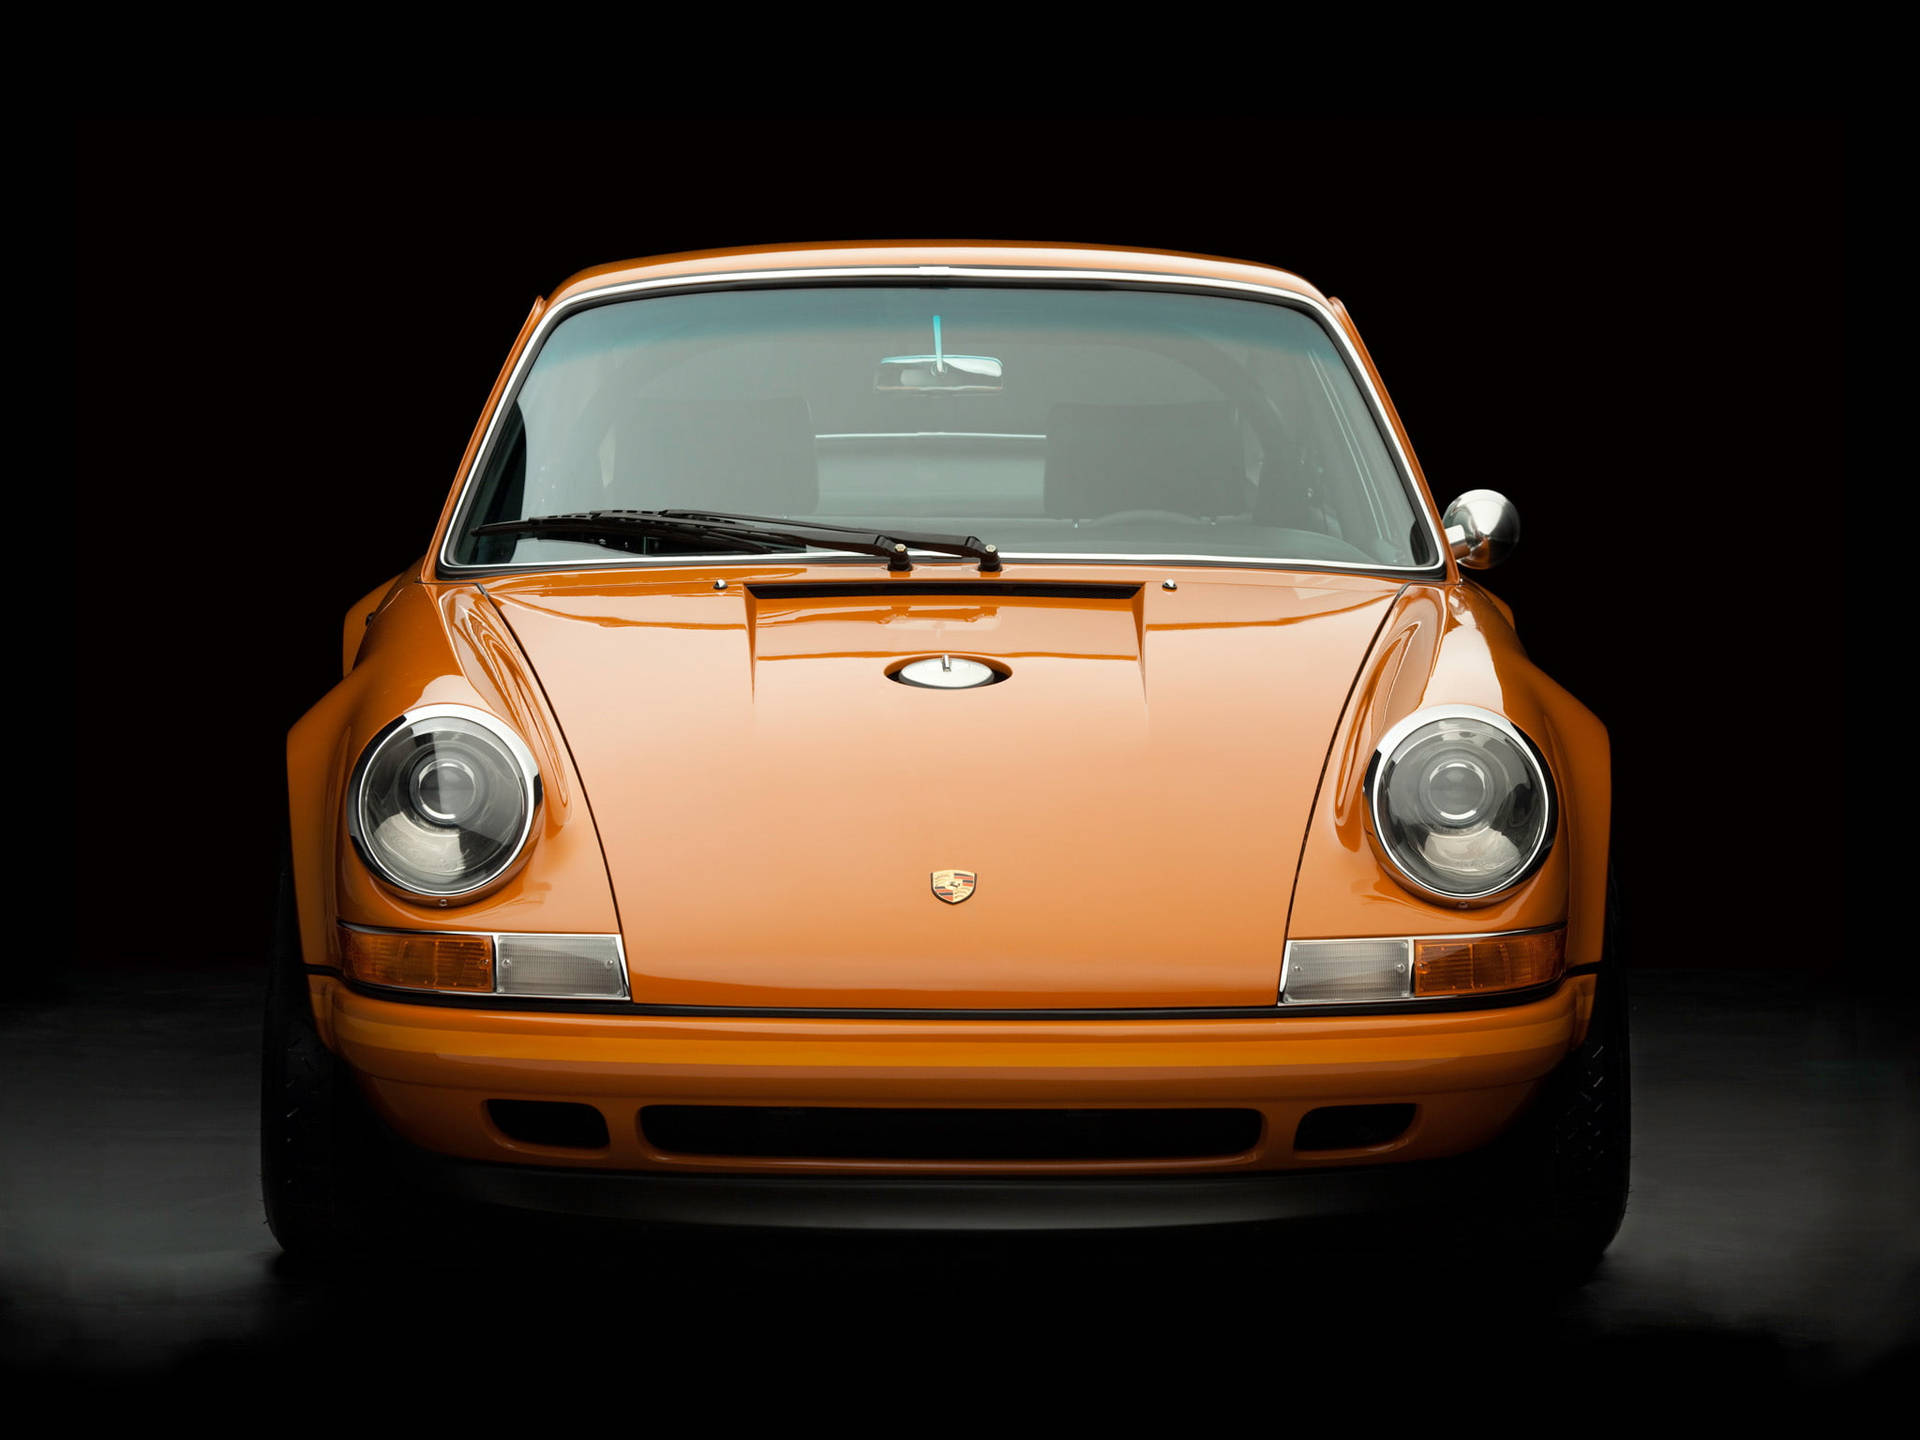 Orangesinger Porsche Framhuvud För Dator- Eller Mobilbakgrund. Wallpaper